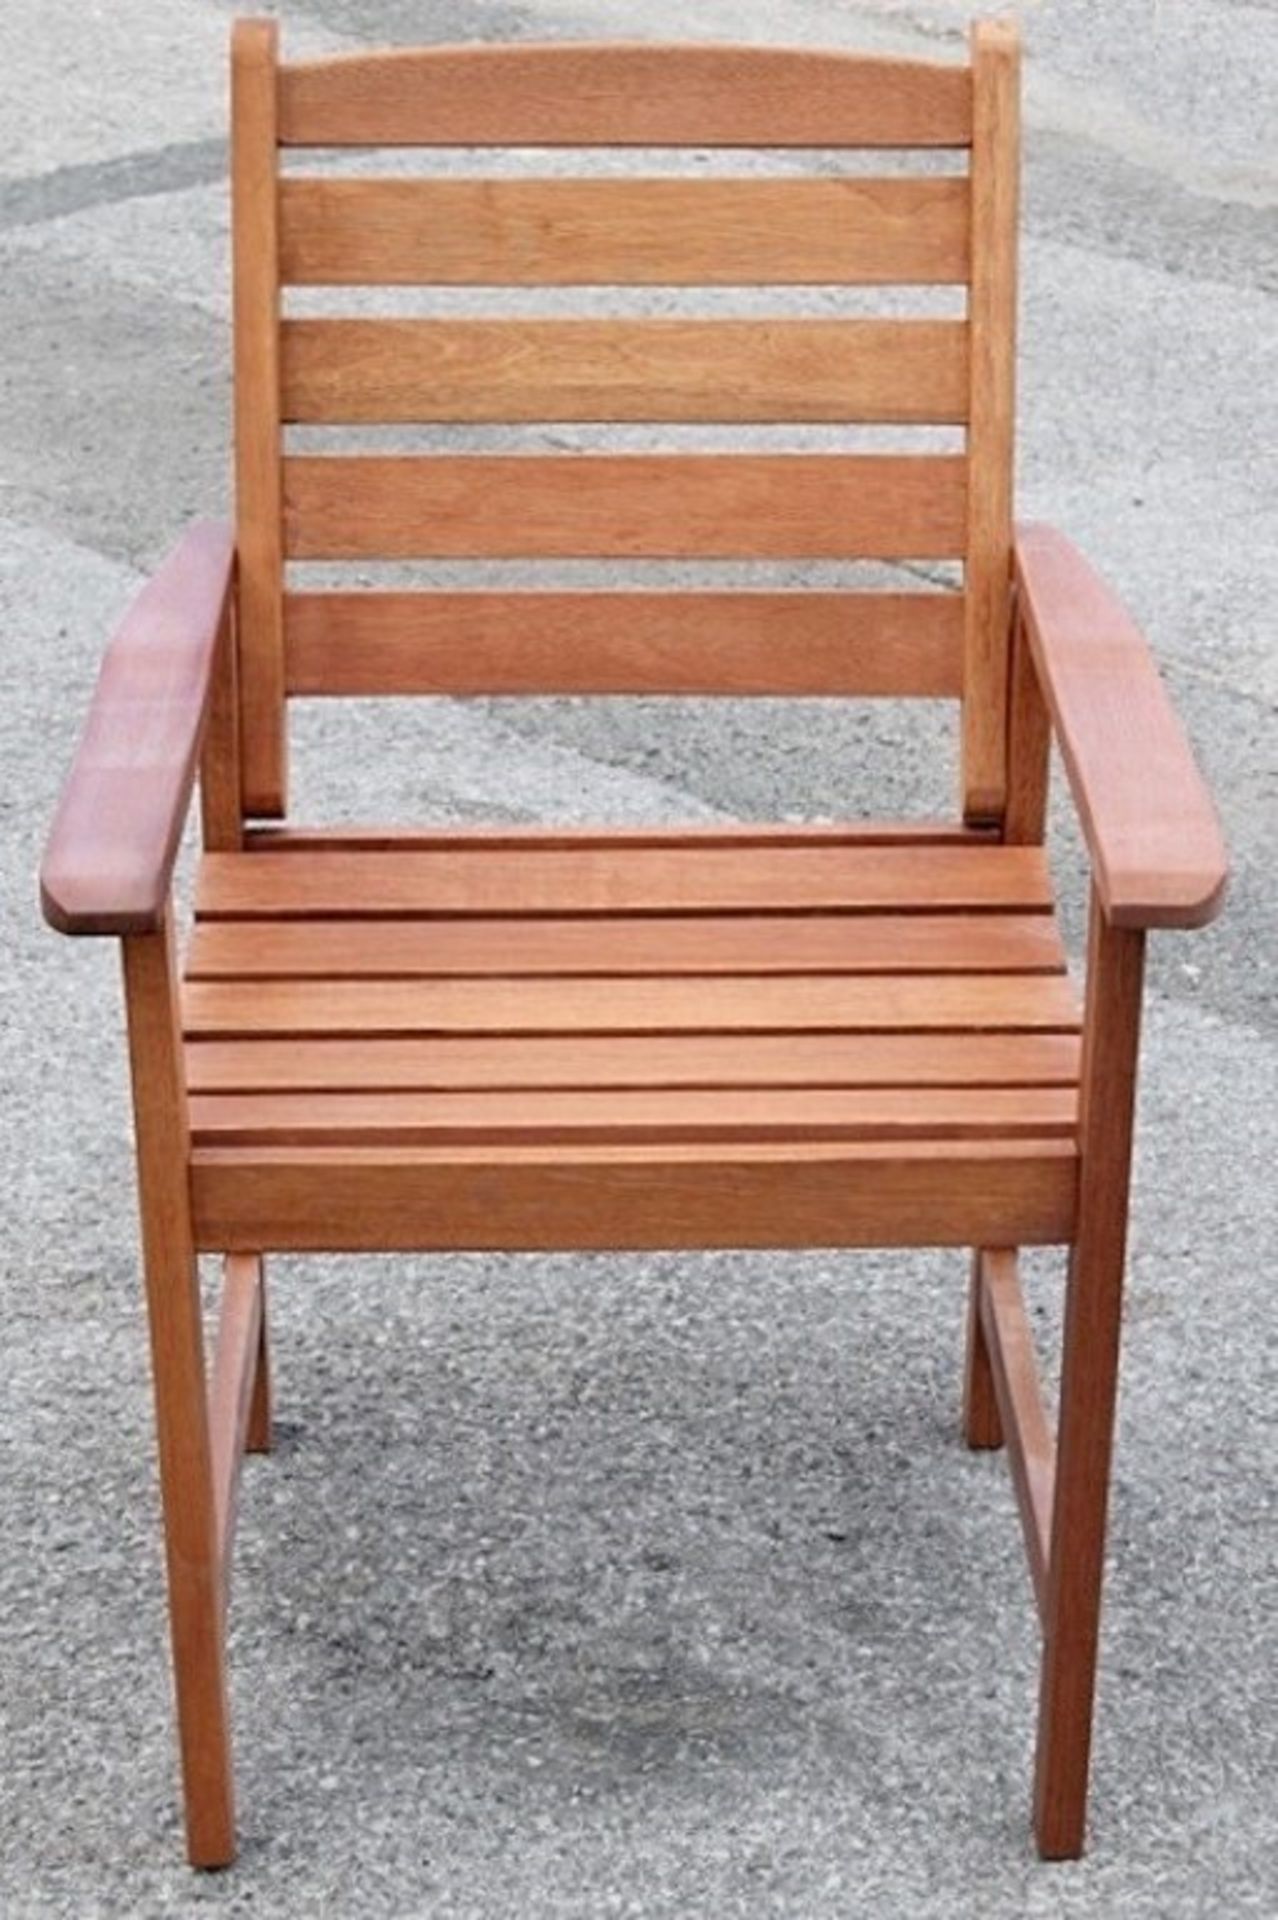 1 x 5-Piece "Macau Nassau" Garden Furniture Set - Includes Bench, Extending Table & 3 x Arm Chairs - - Image 9 of 9